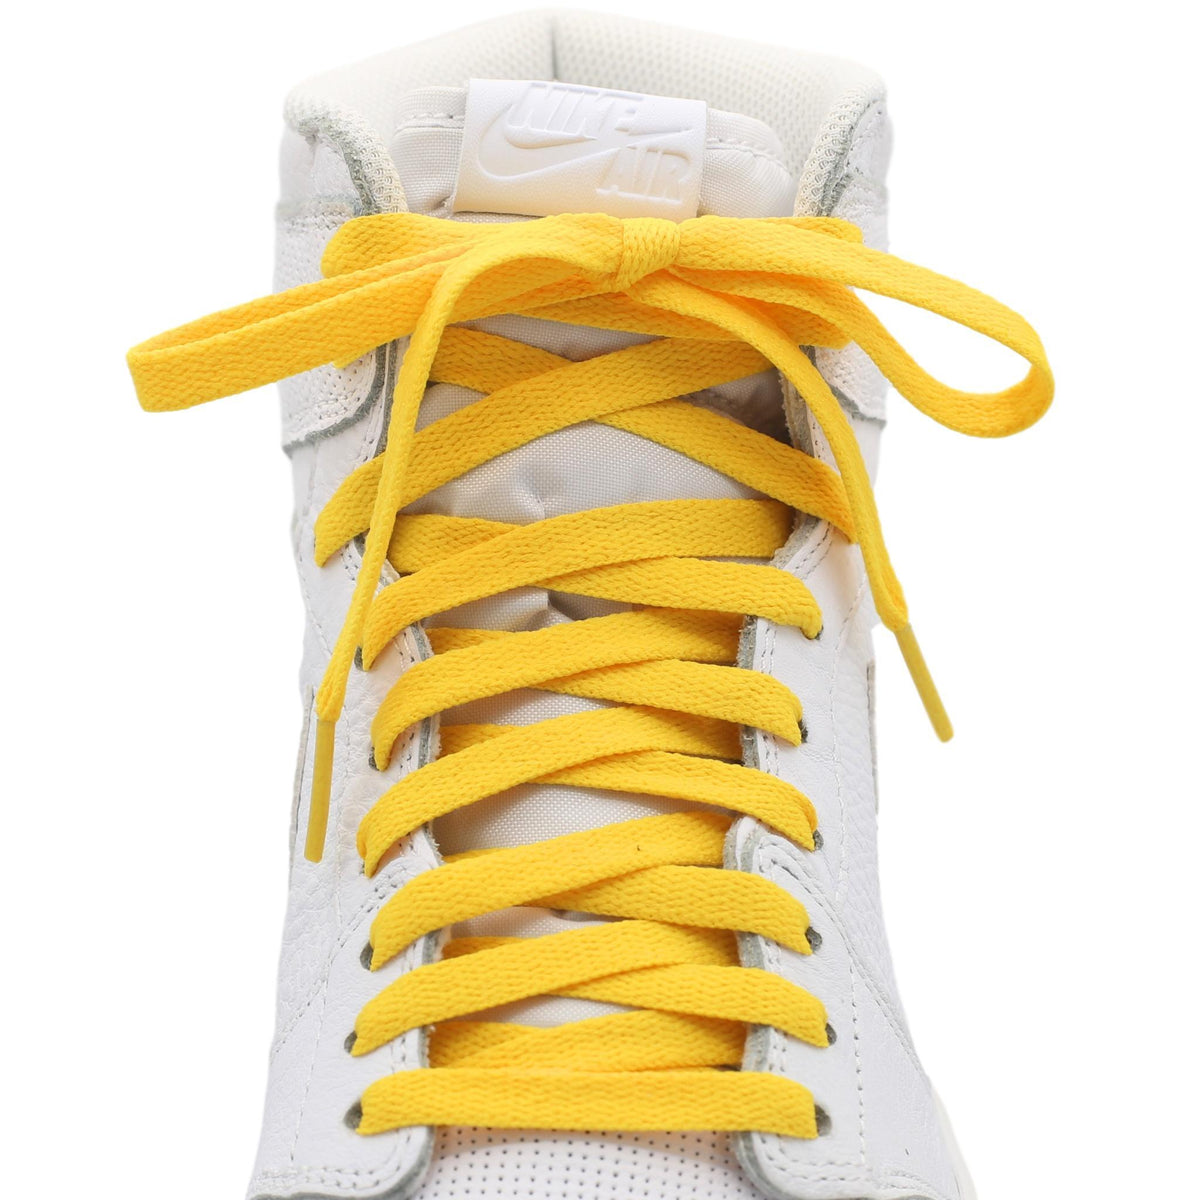 mustard yellow shoe laces